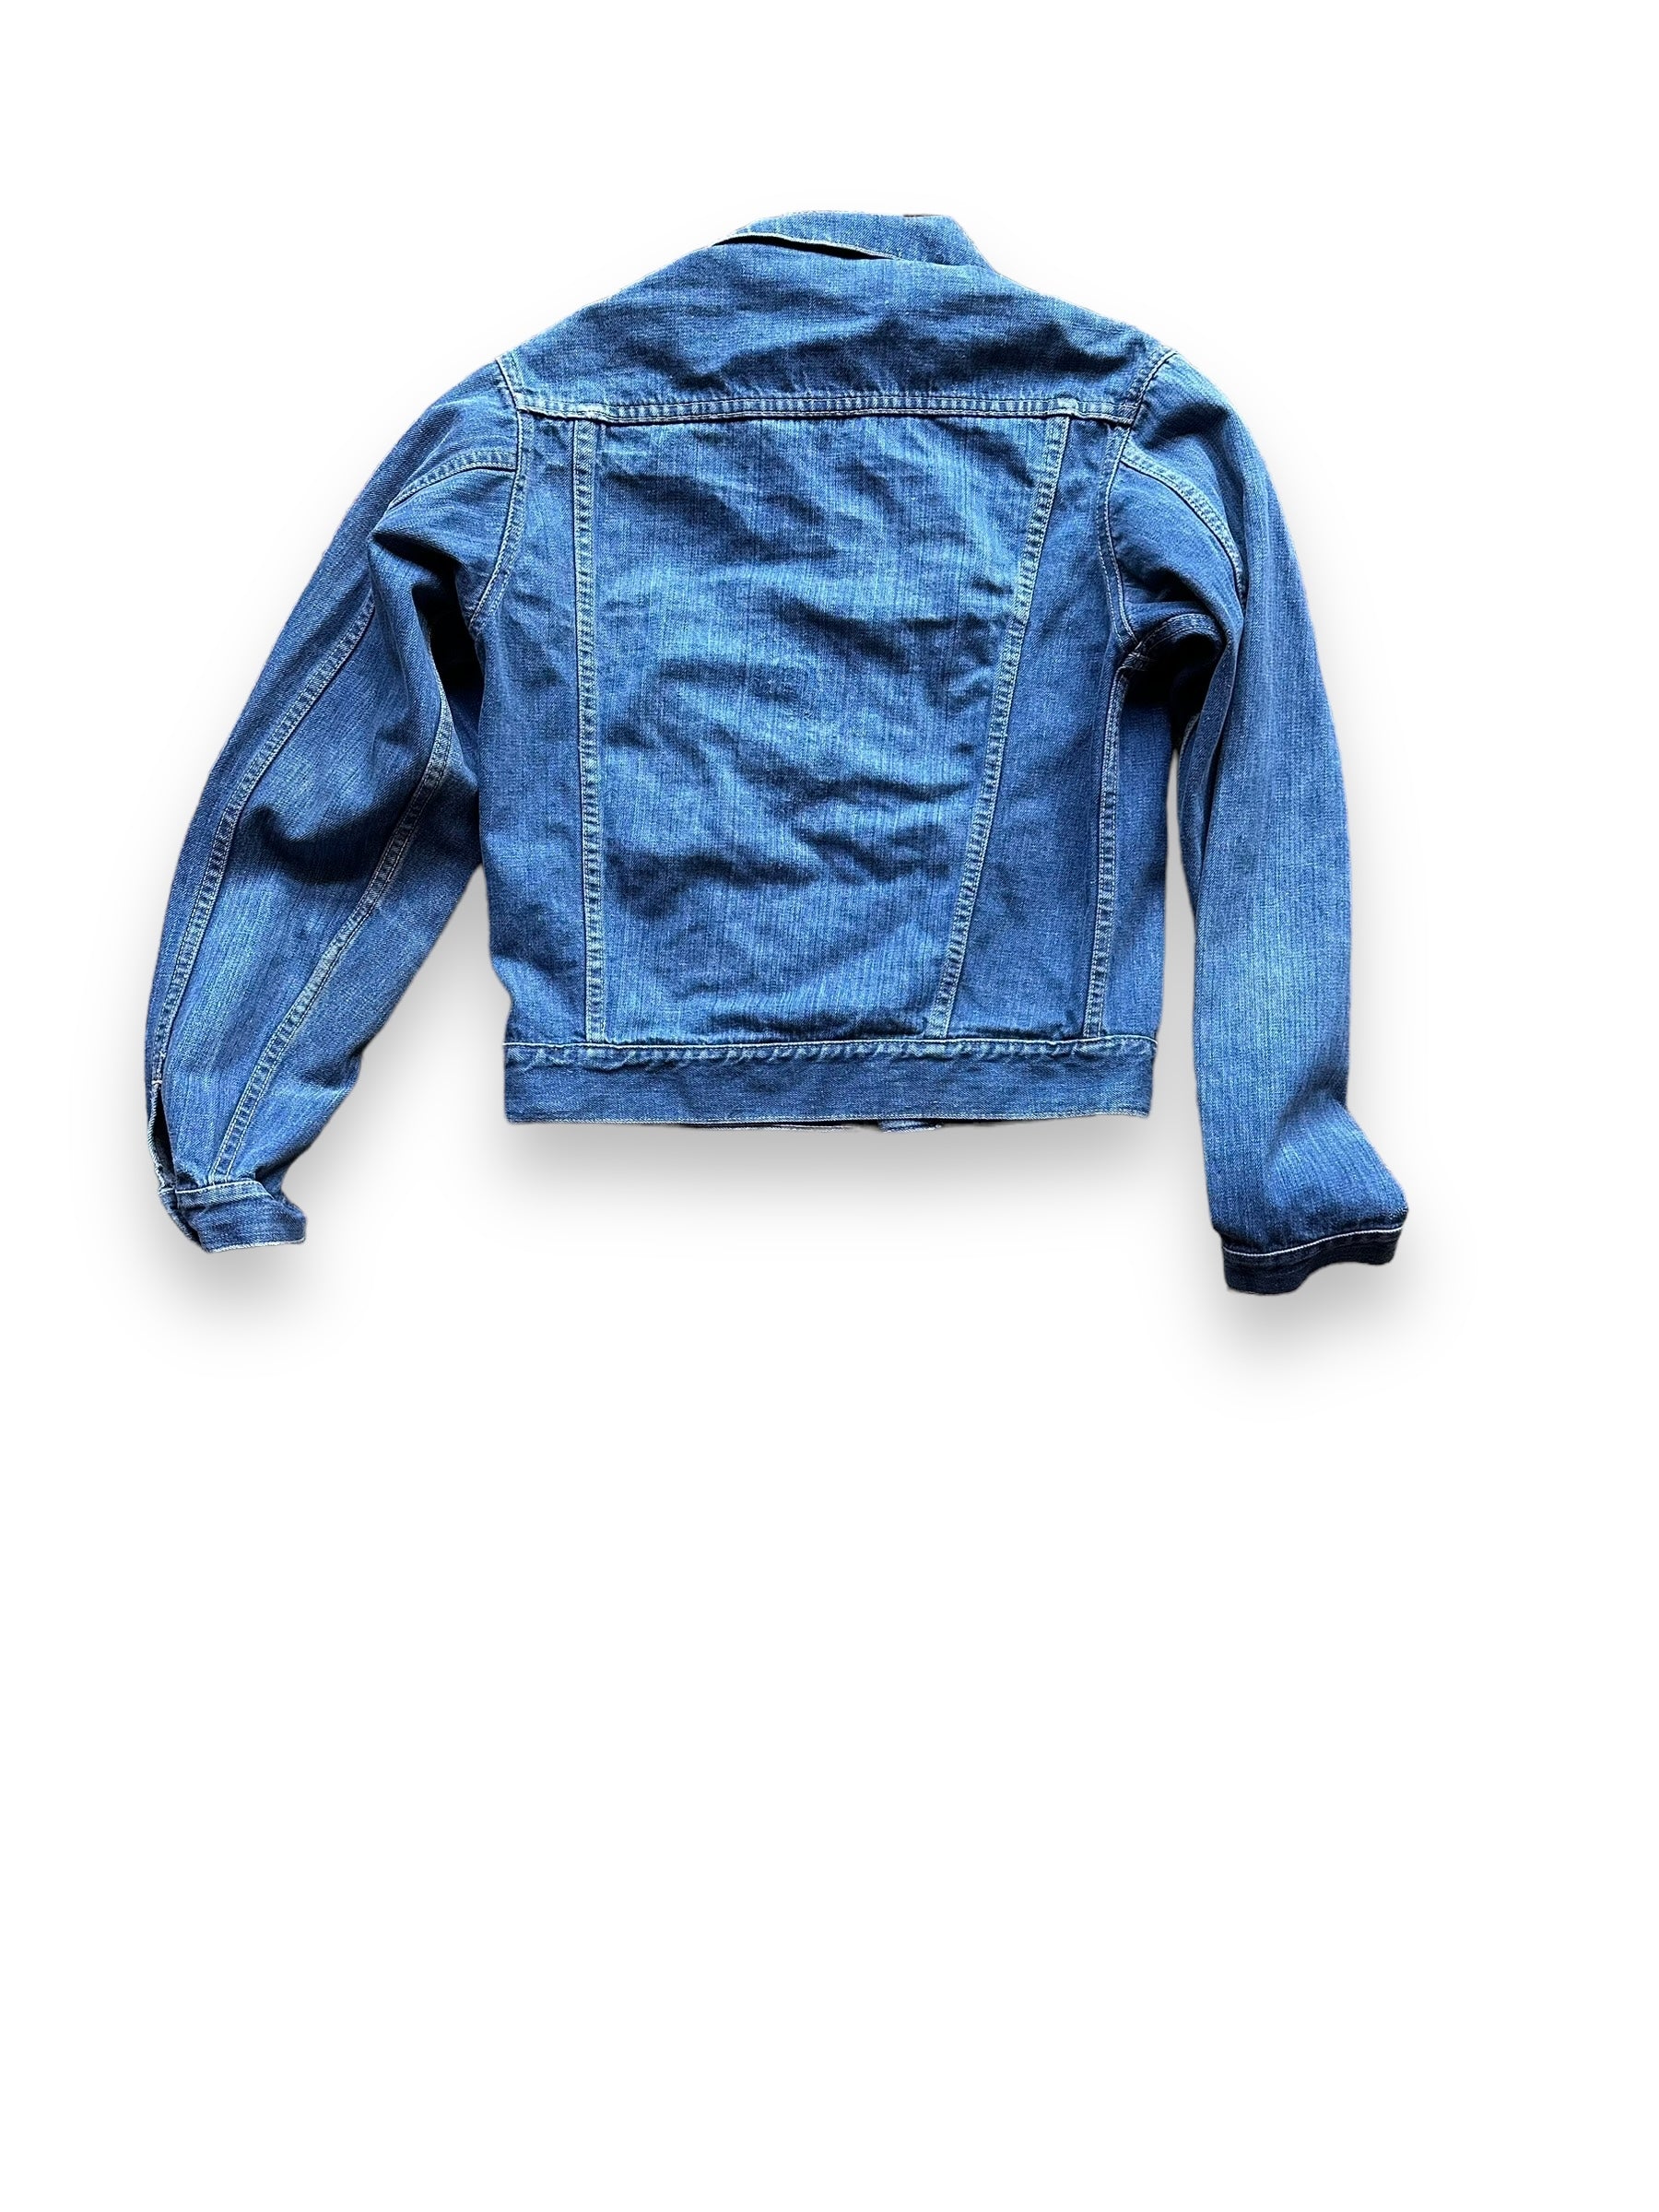 Rear View of Vintage Unbranded Type 3 Denim Jacket SZ M | Vintage Denim Jacket Seattle | Seattle Vintage Denim